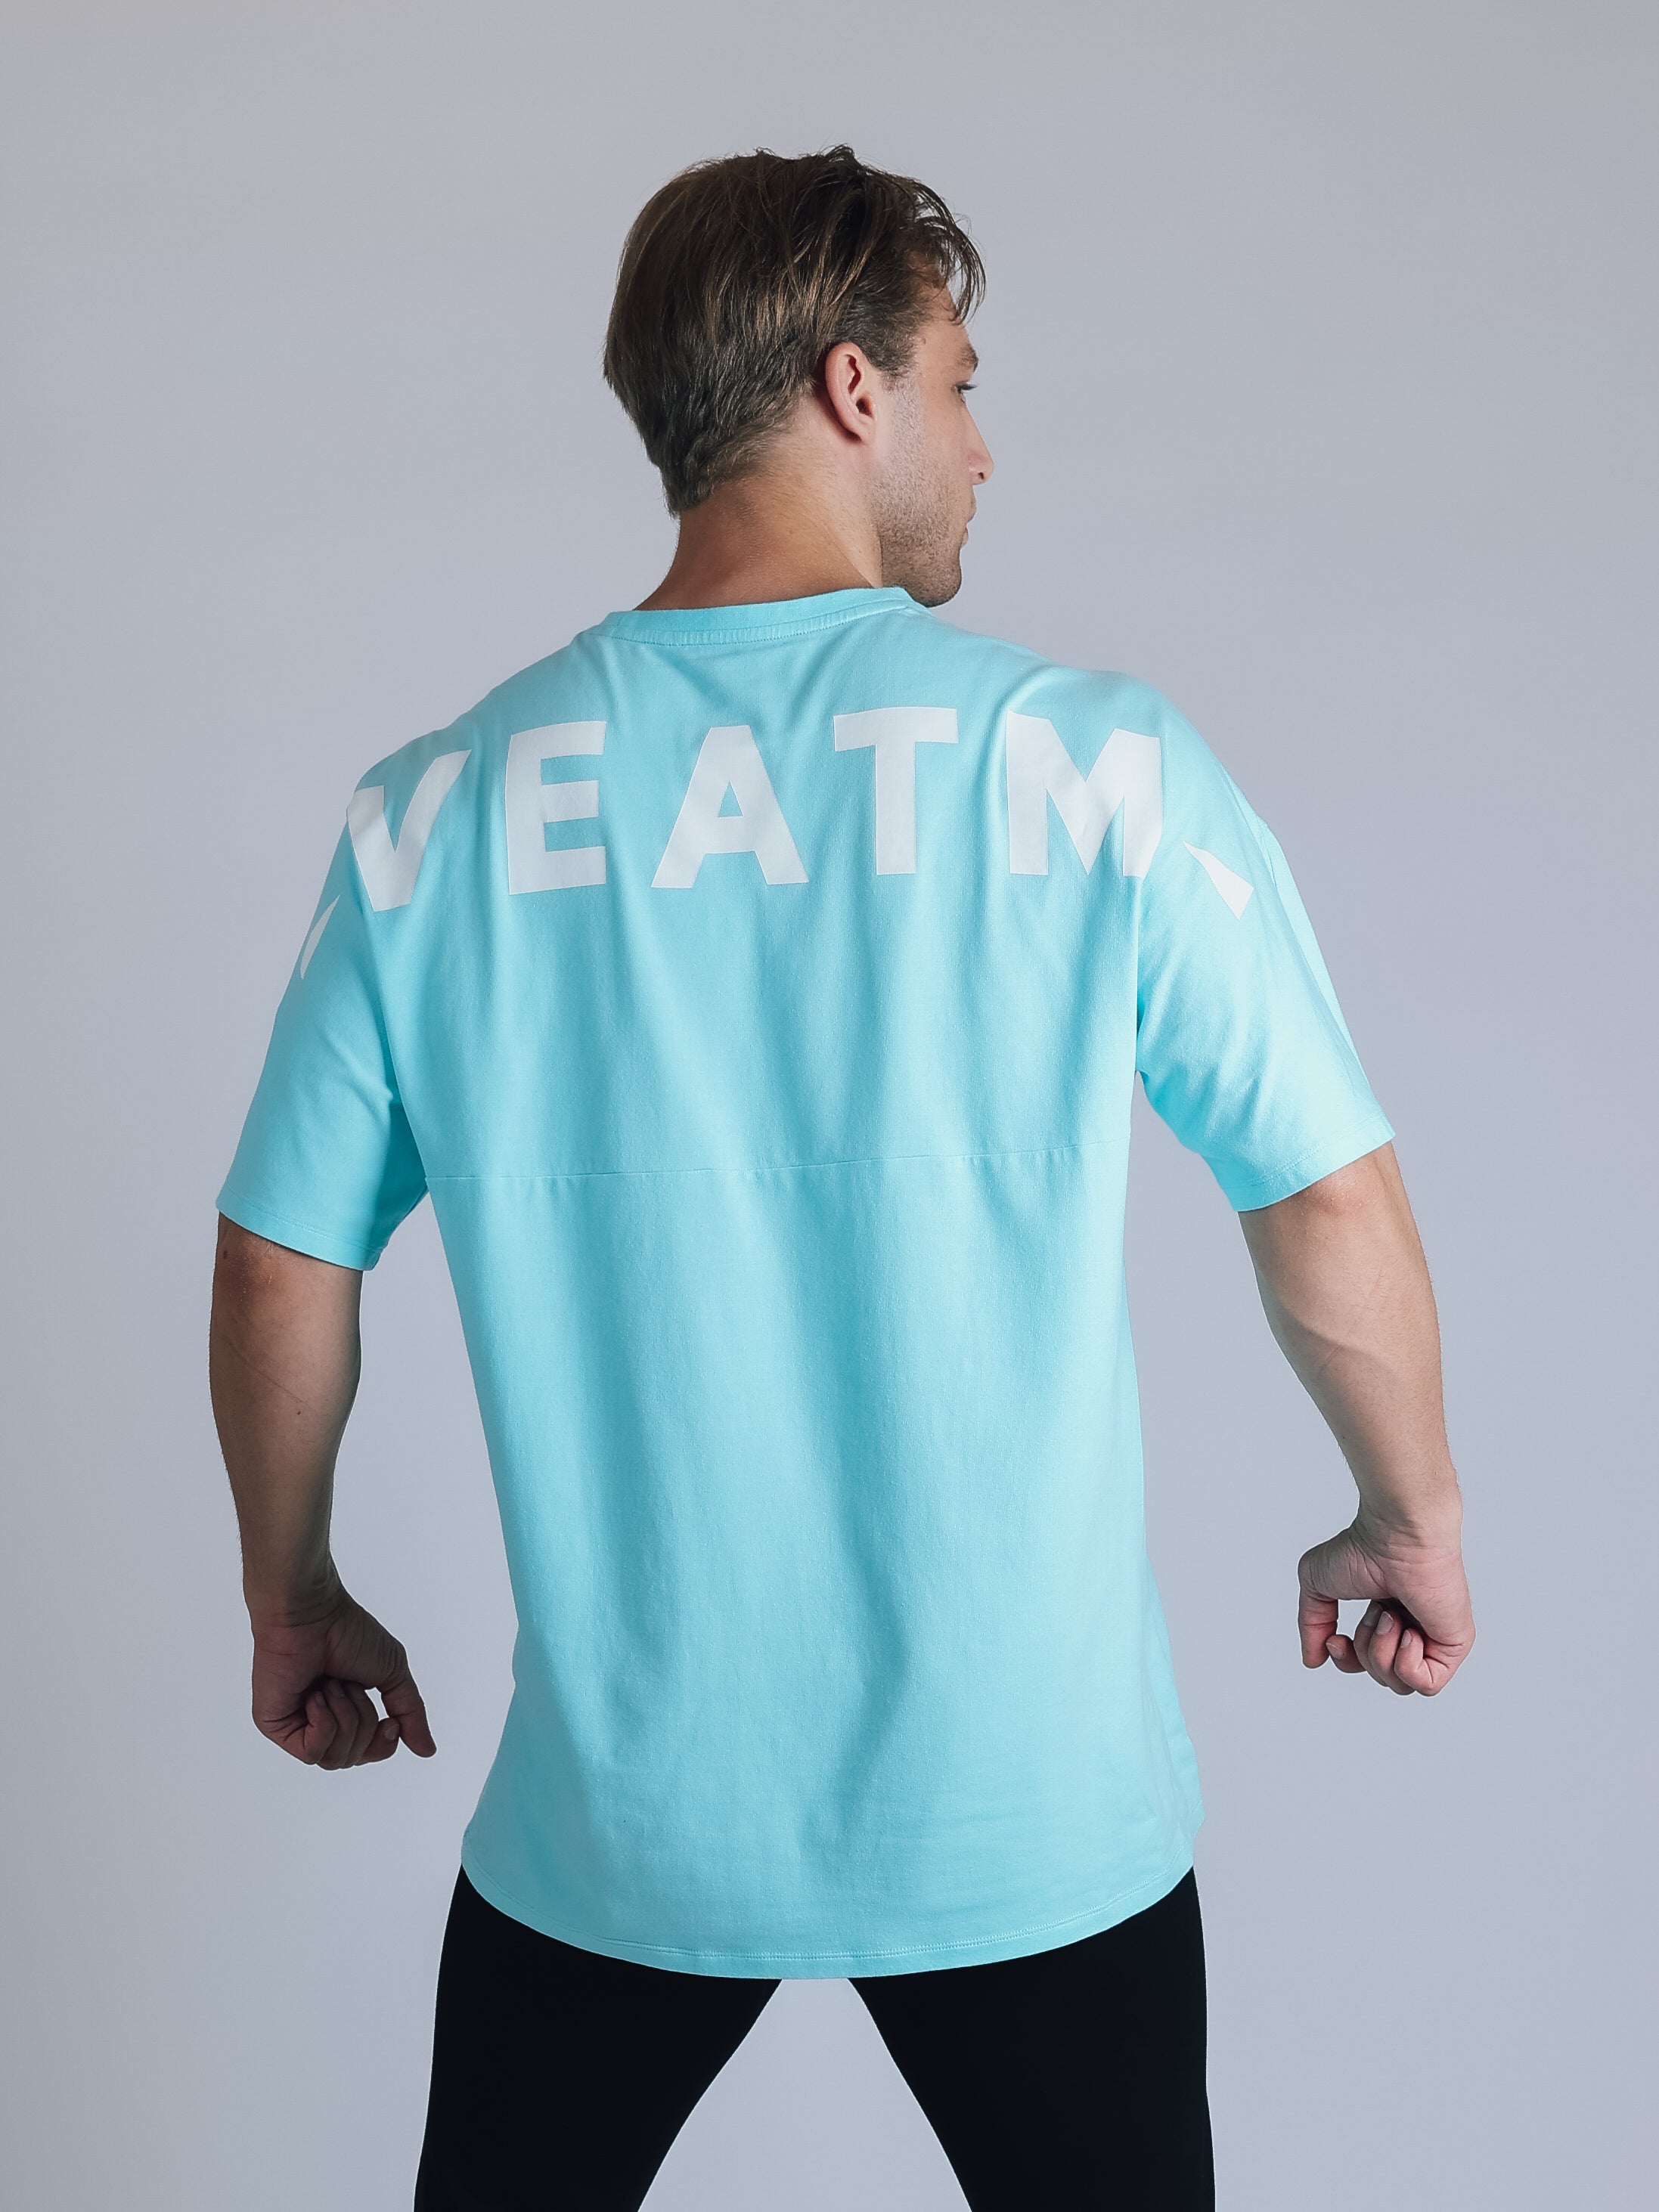 VEATM Tシャツ Lサイズ - エクササイズ